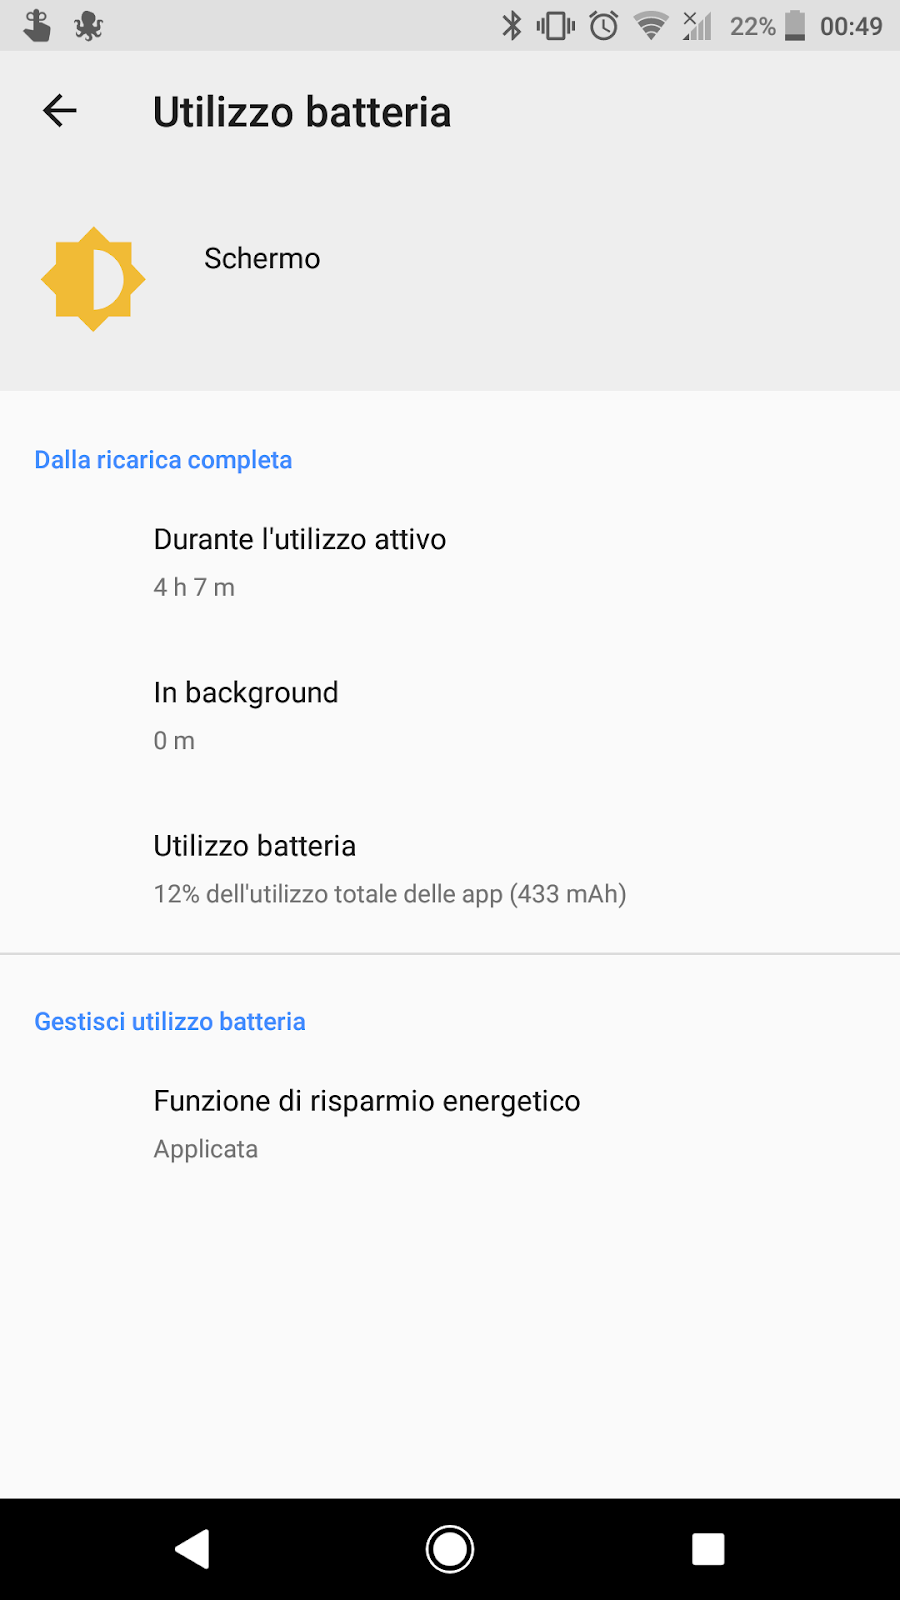 51b5b Screenshot 20180719 004935 - Sony Xperia XA2 Ultra - recensione